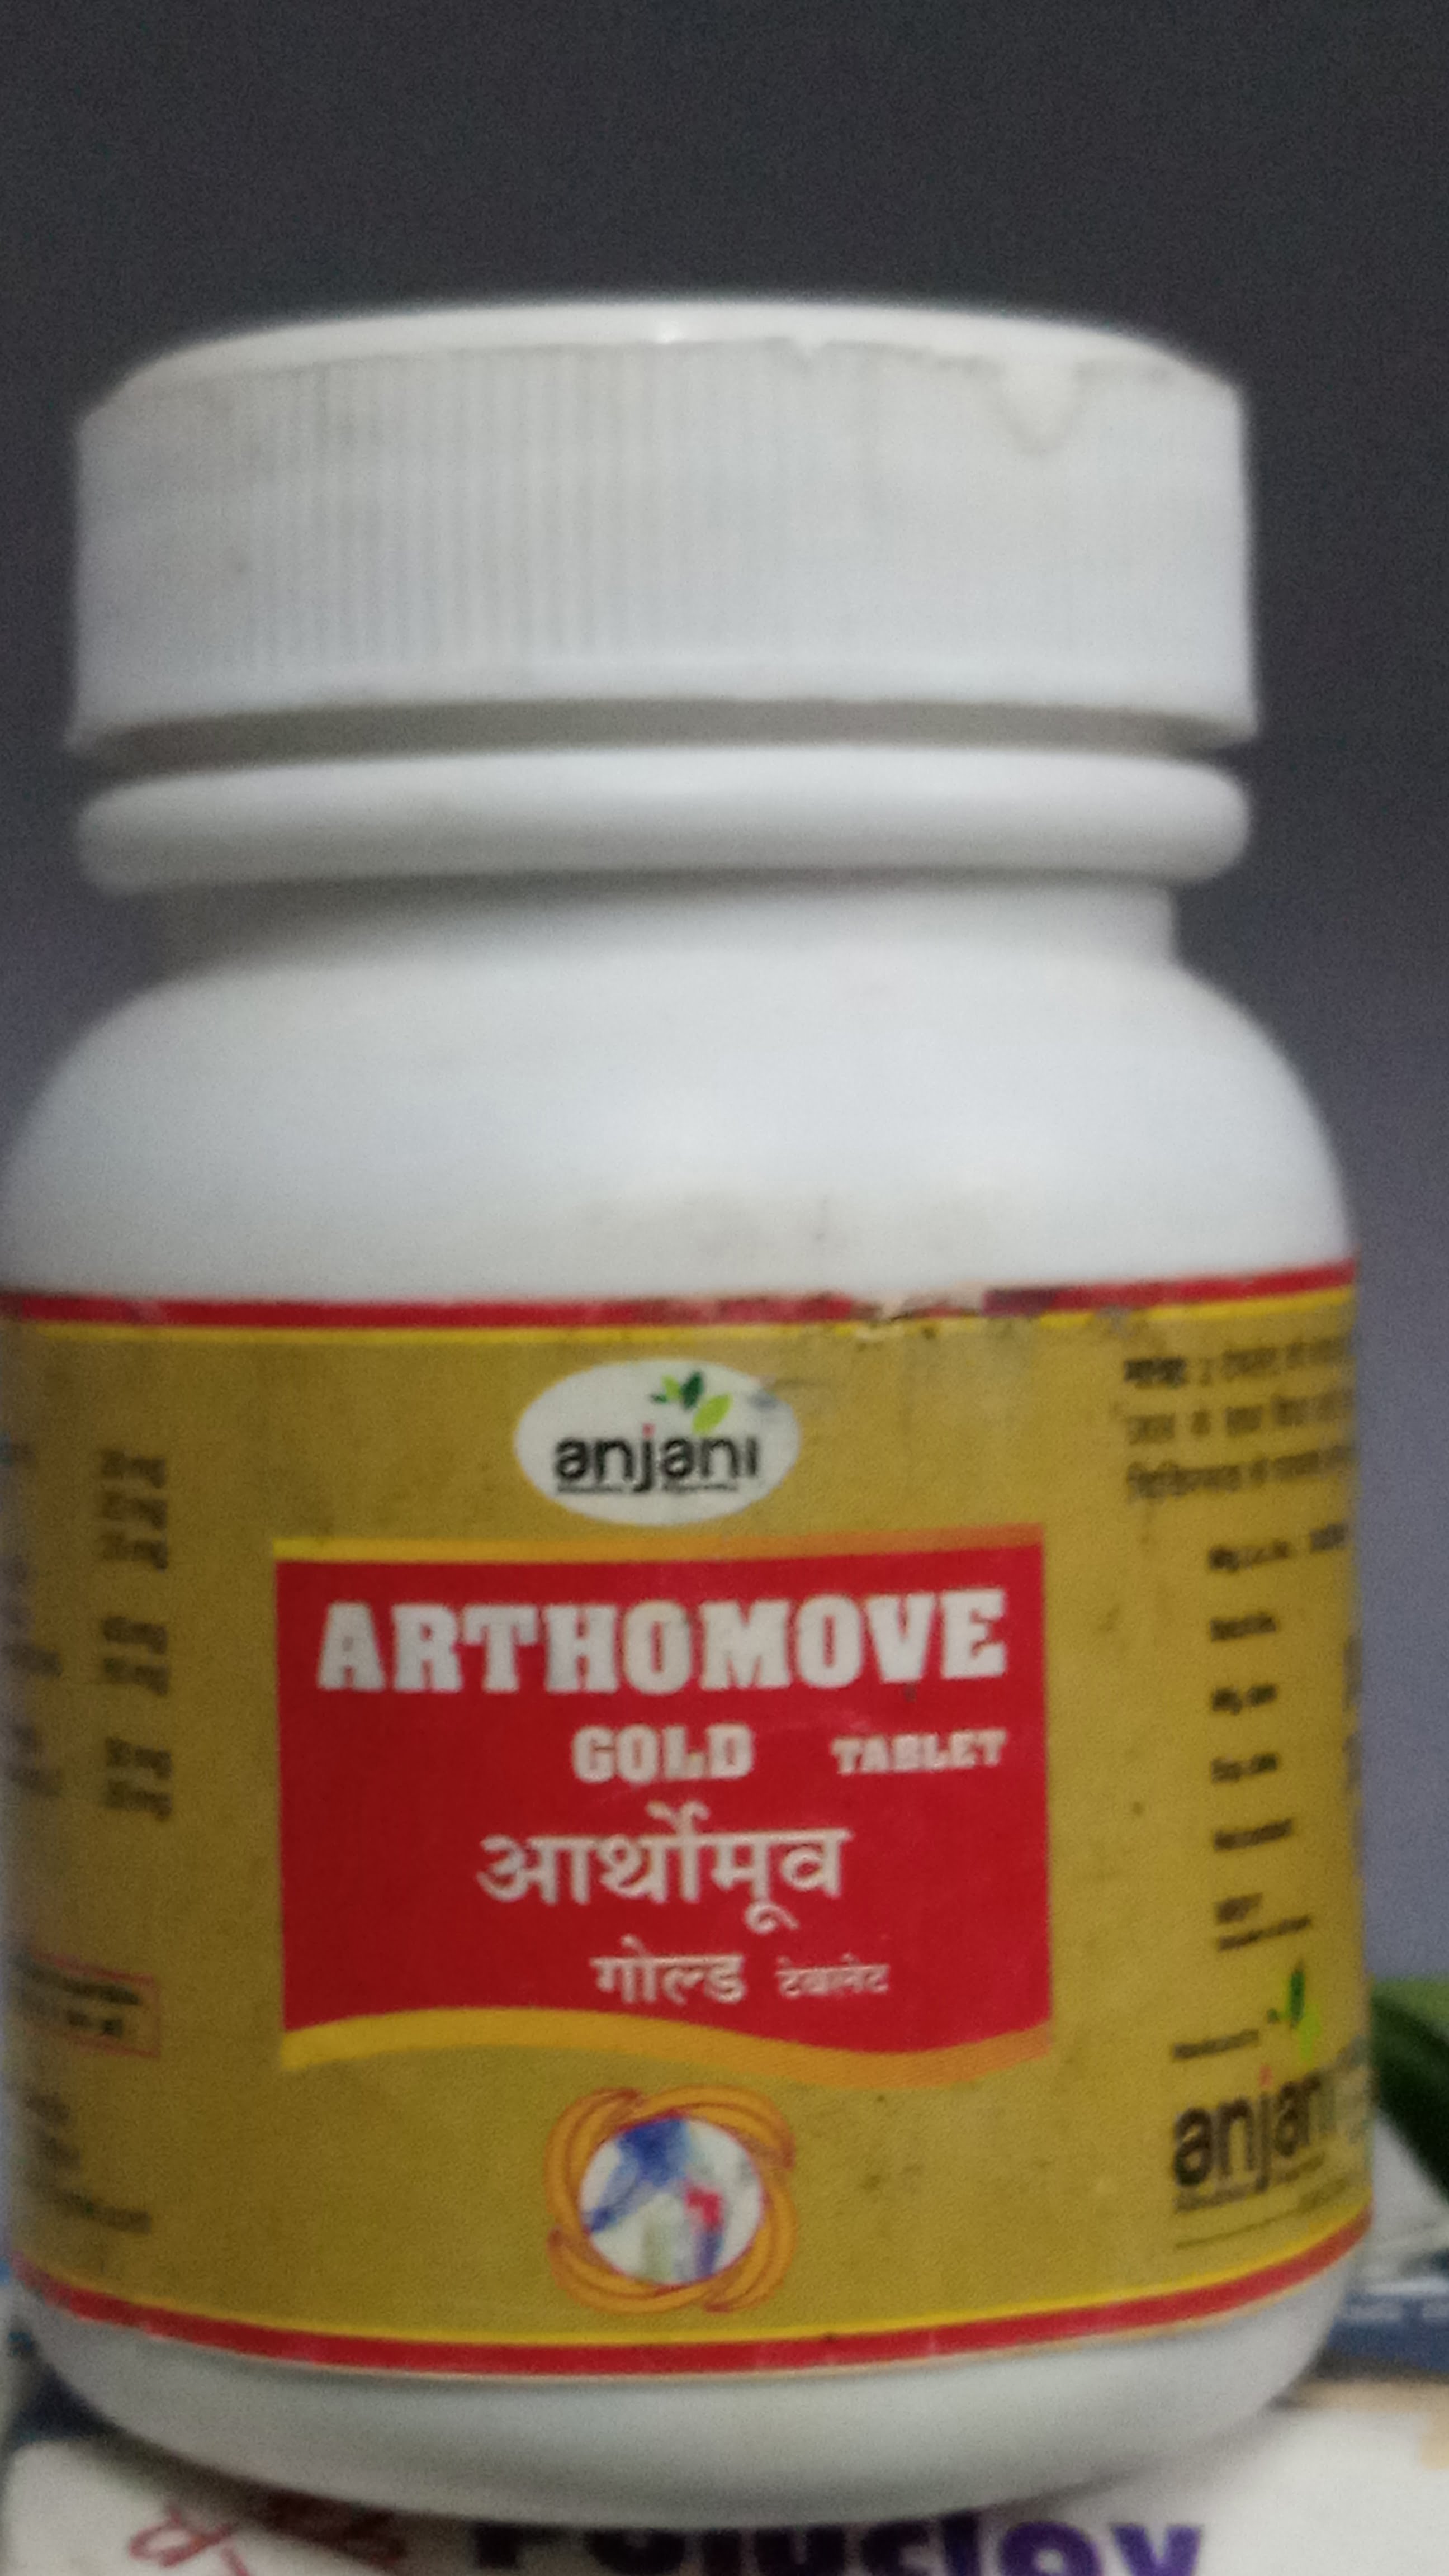 arthomove gold tablet 10 tab upto 20% off anjani pharmaceuticals